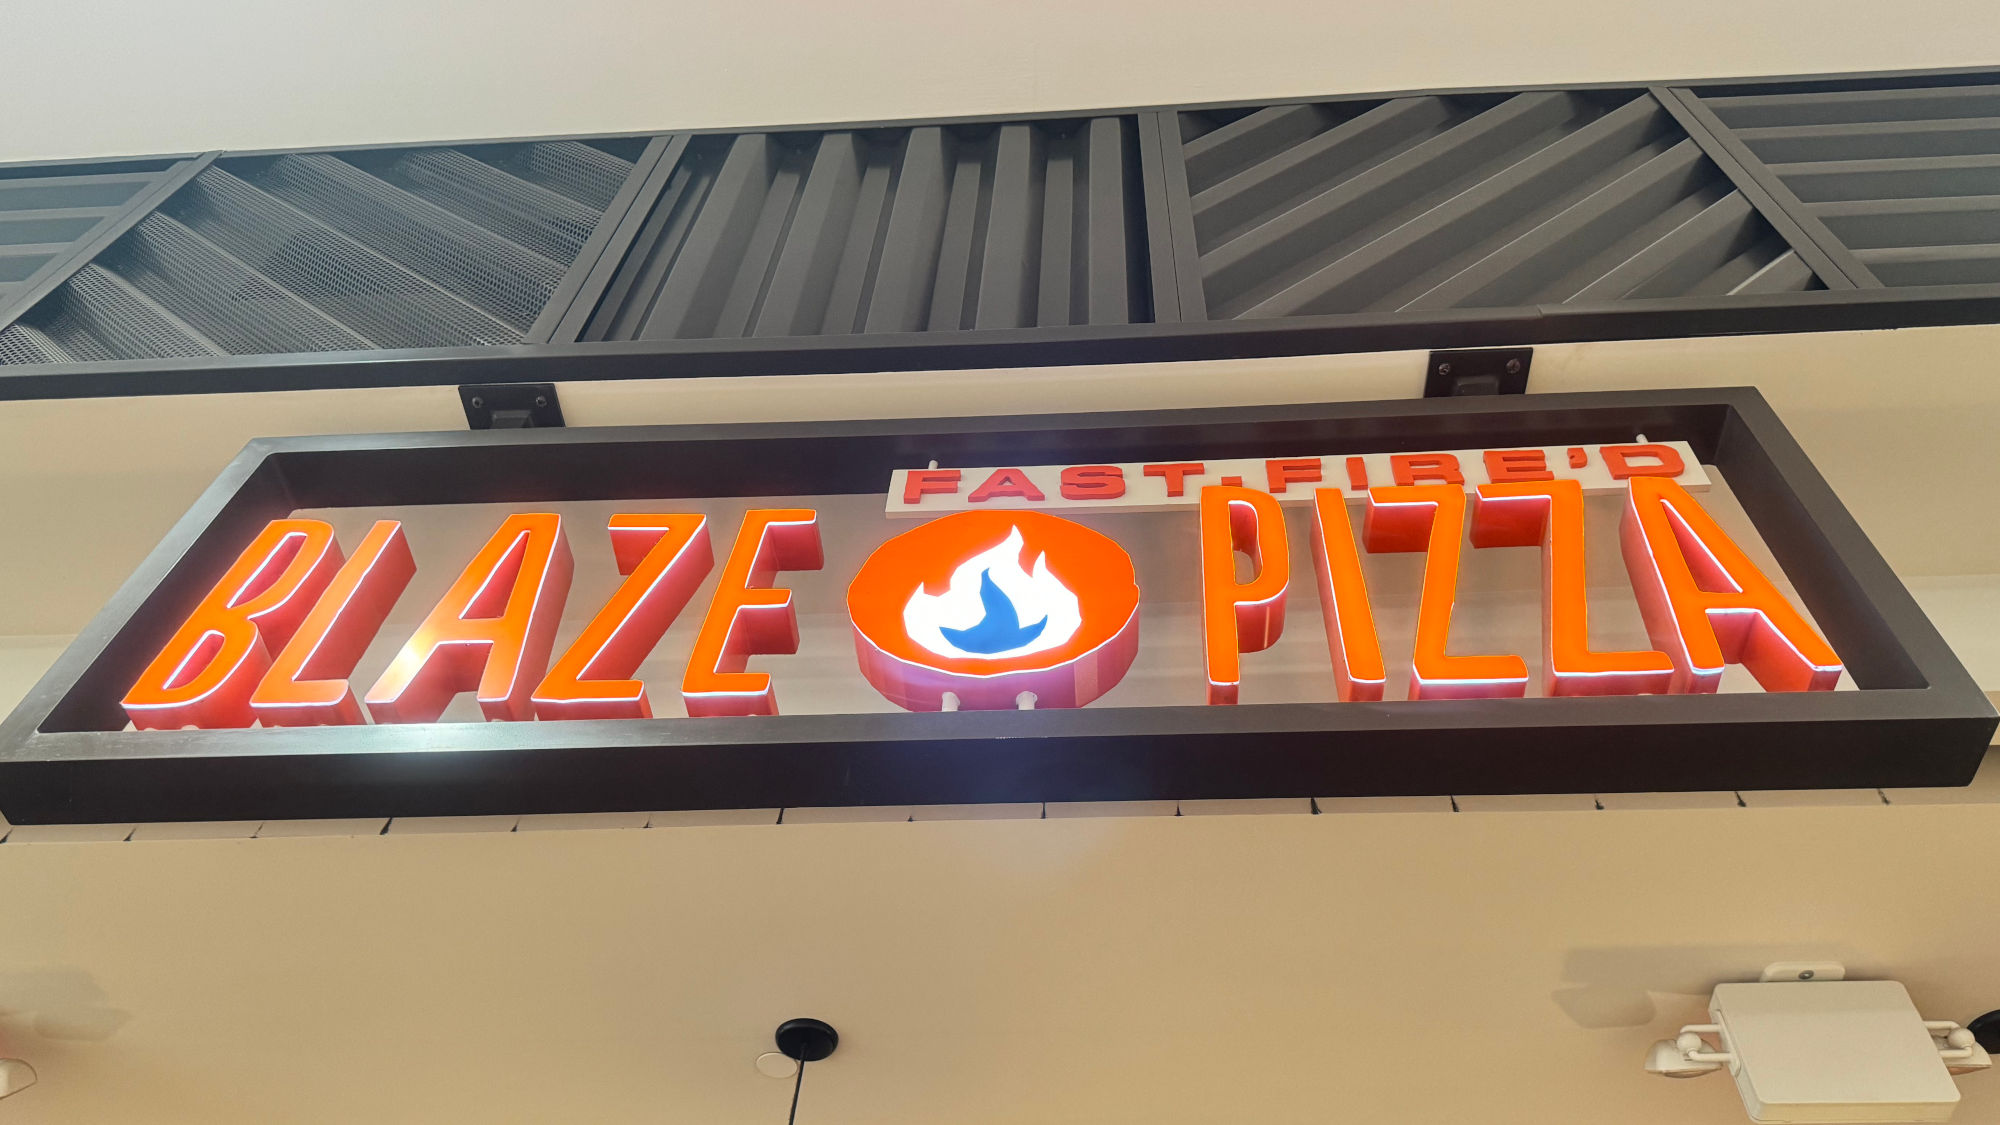 Blaze Pizza Sign